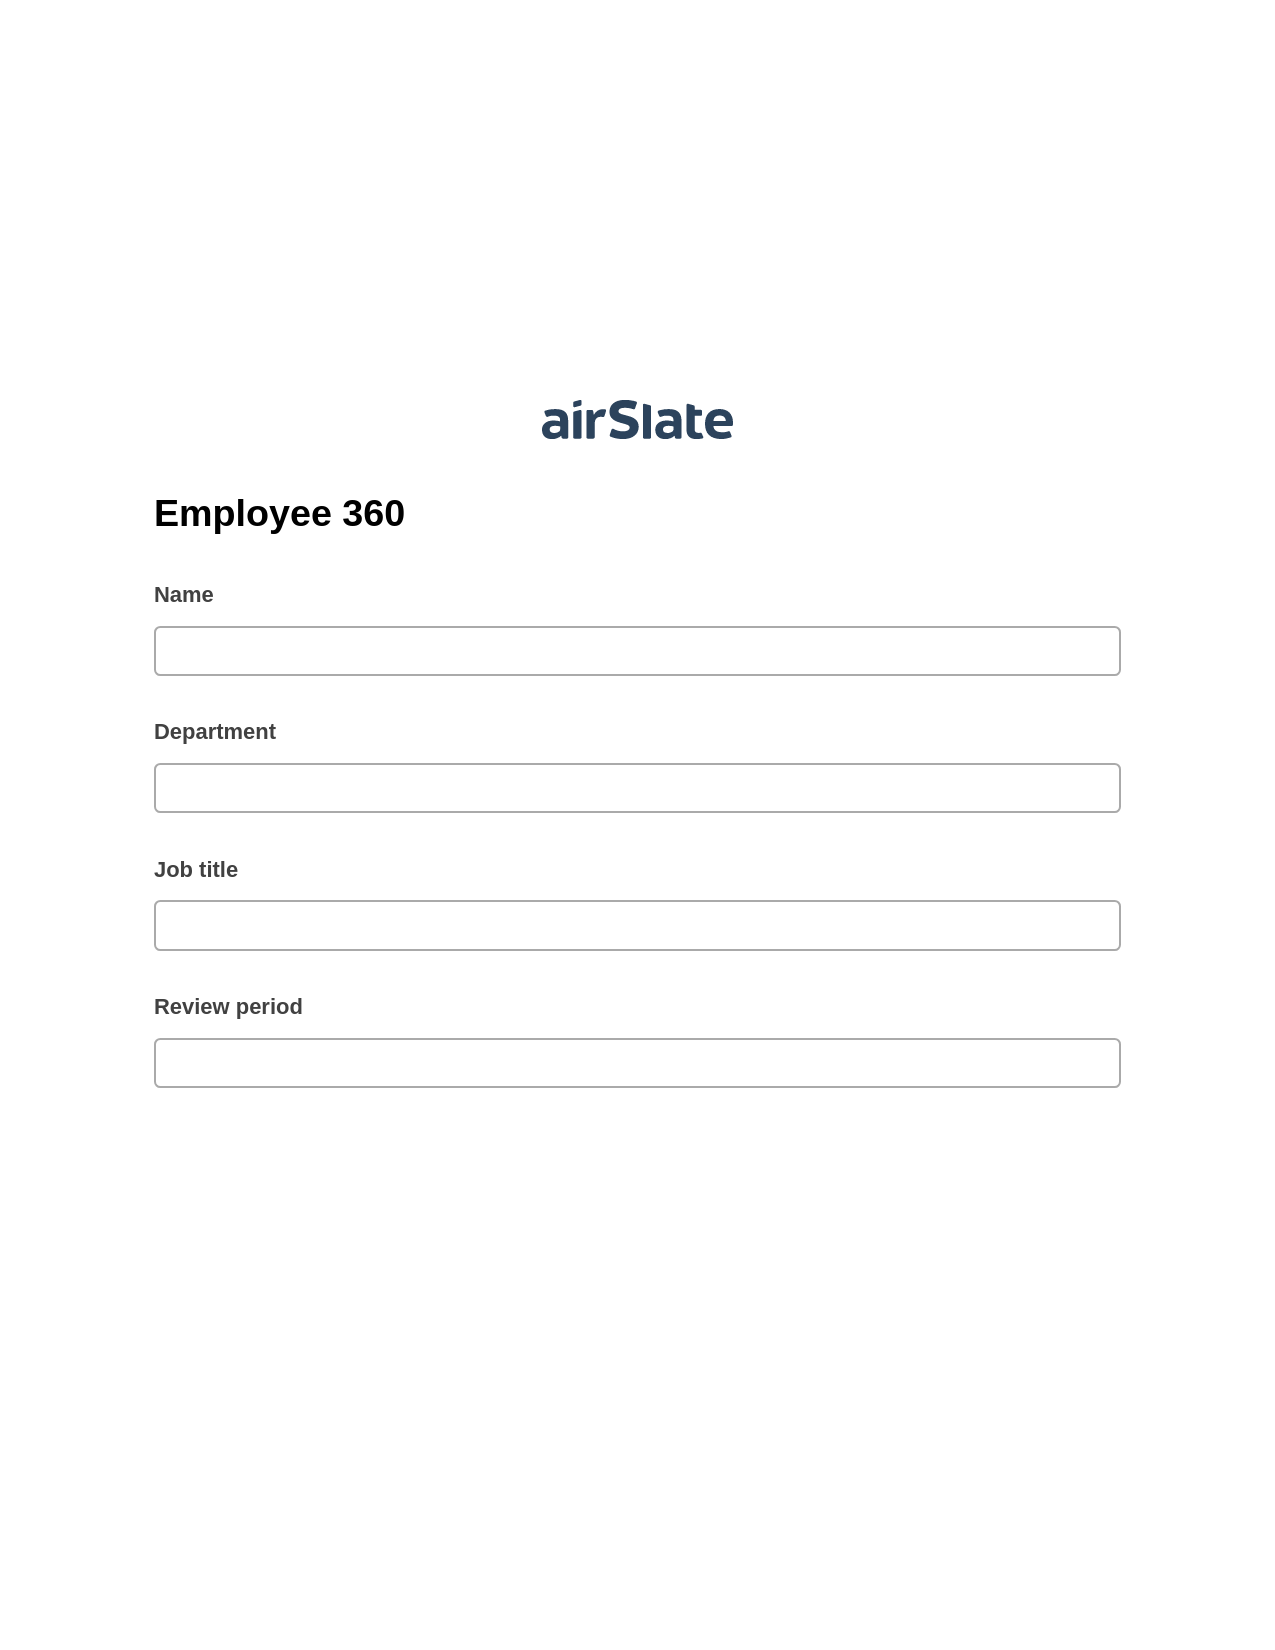 Multirole Employee 360 Pre-fill from MySQL Bot, Lock the Slate Bot, Archive to Dropbox Bot